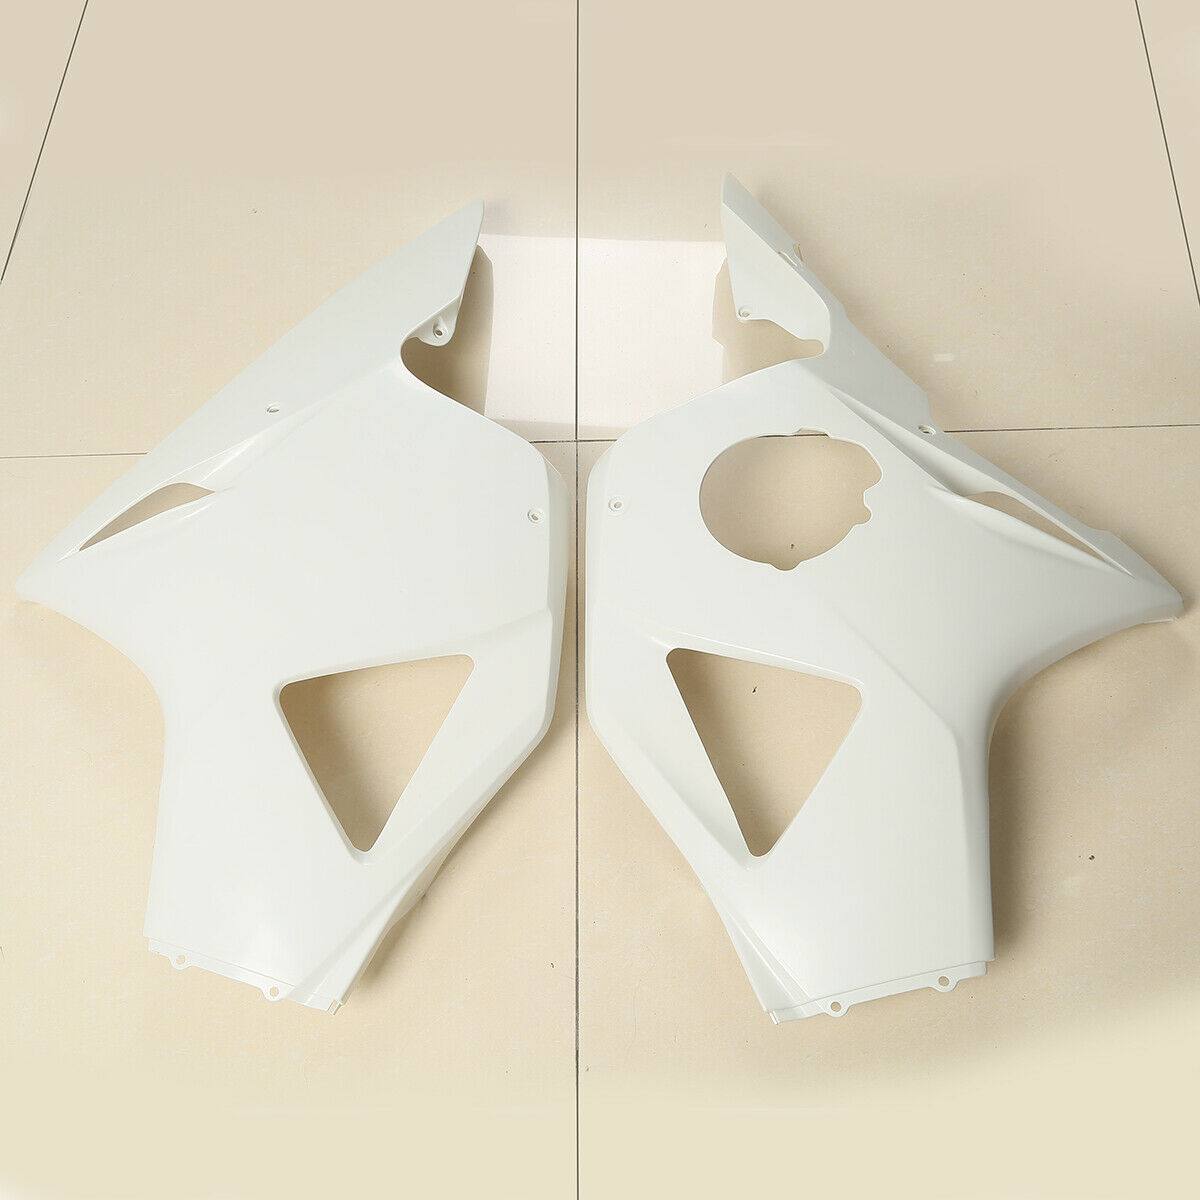 Unpainted ABS Plastic Fairing Bodywork Kit Fit For Honda CBR954RR 2002-2003 02 - Moto Life Products